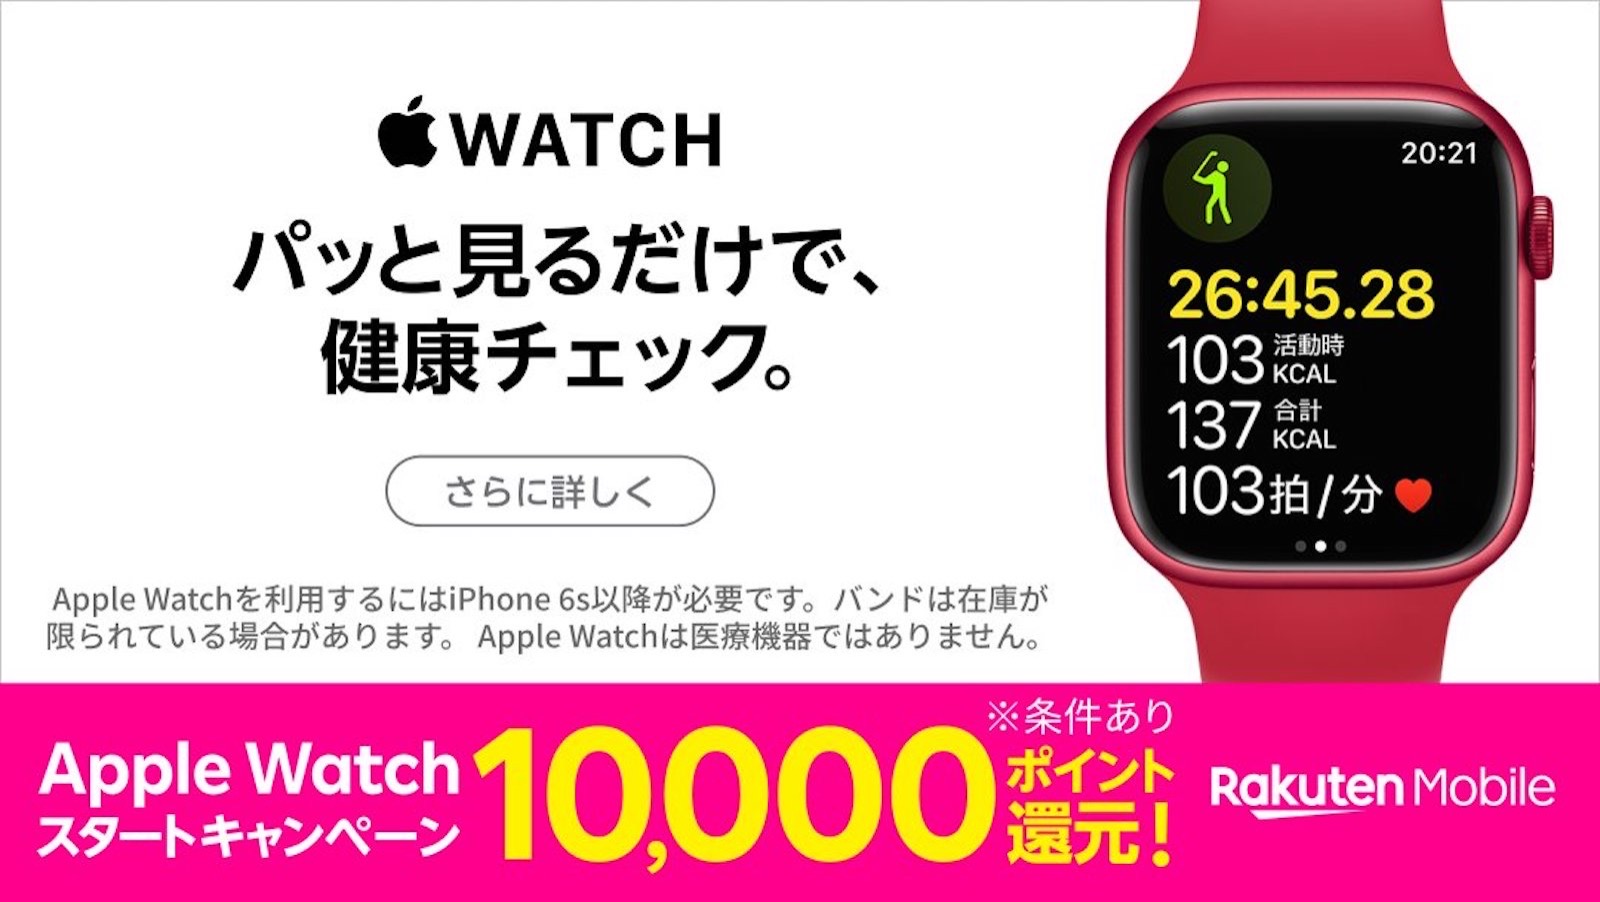 Rakuten mobile apple watch